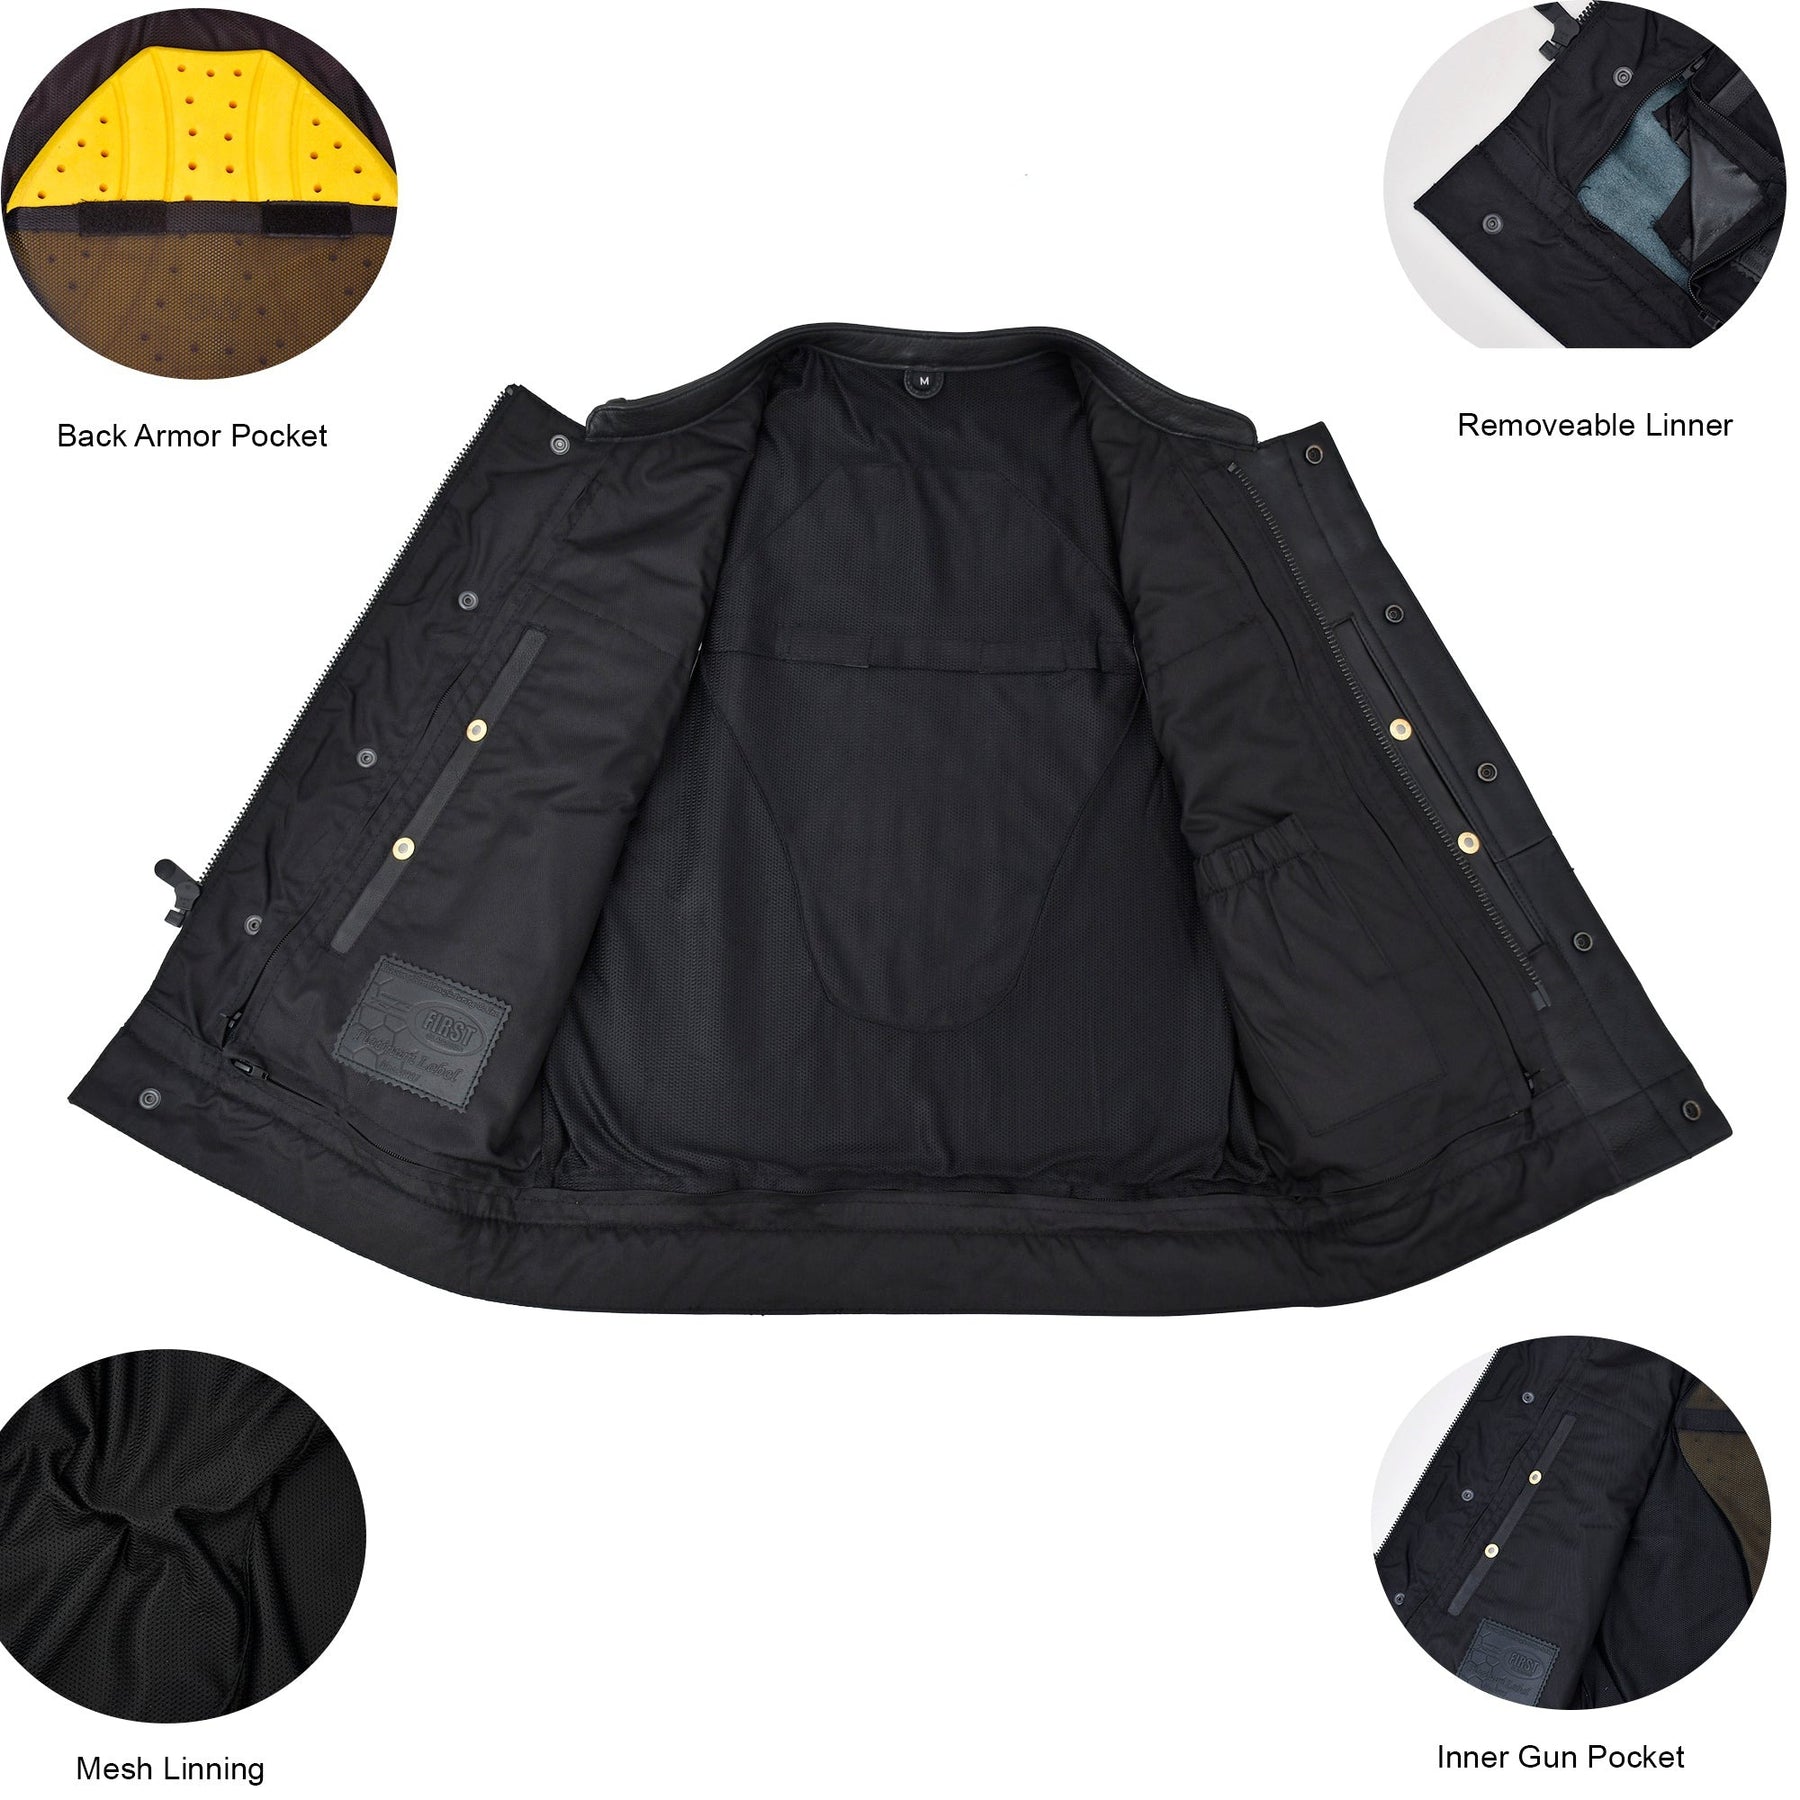 RUTGER - Motorcycle Leather Vest Men's Vest Best Leather Ny   